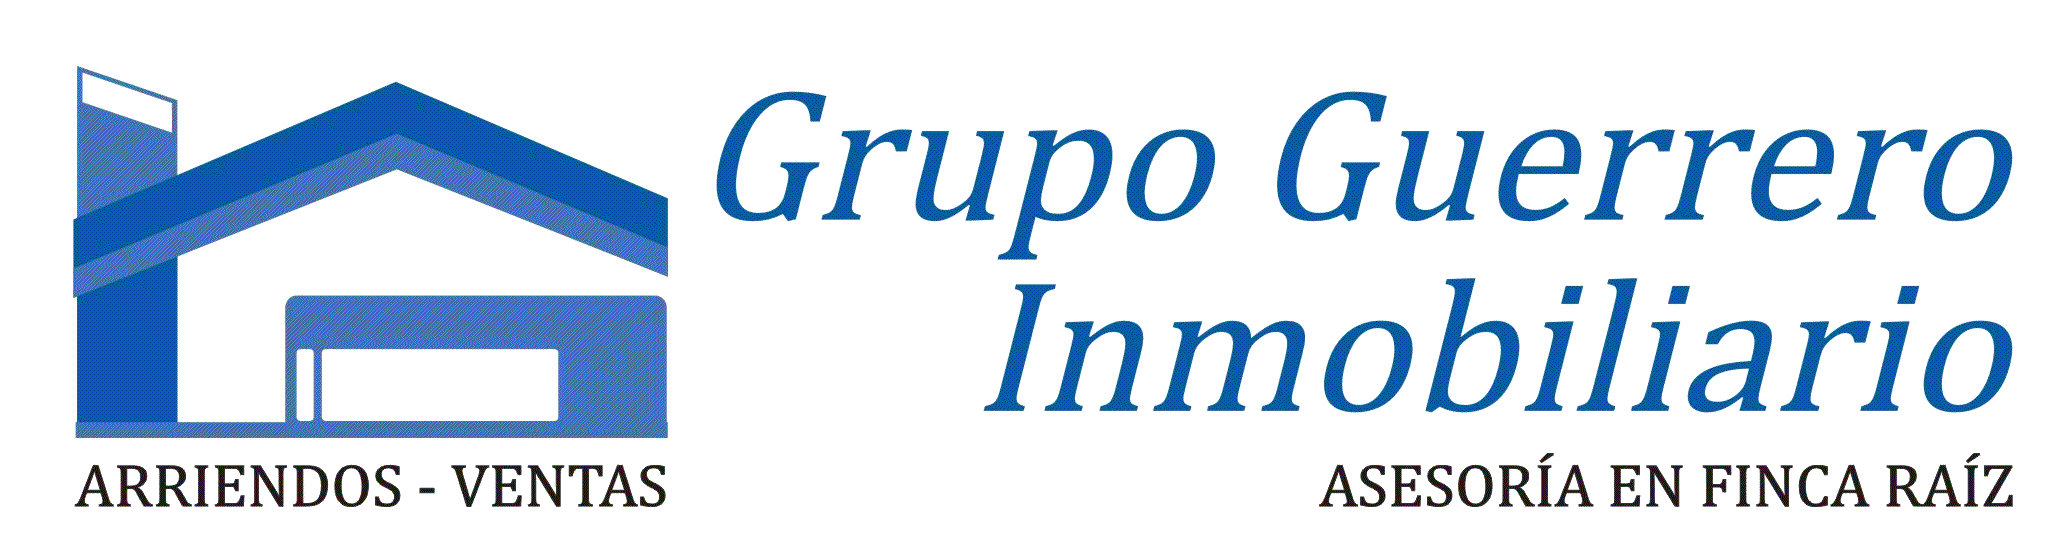 Grupo Guerrero Inmobiliario-Grupo Guerrero Inmobiliario